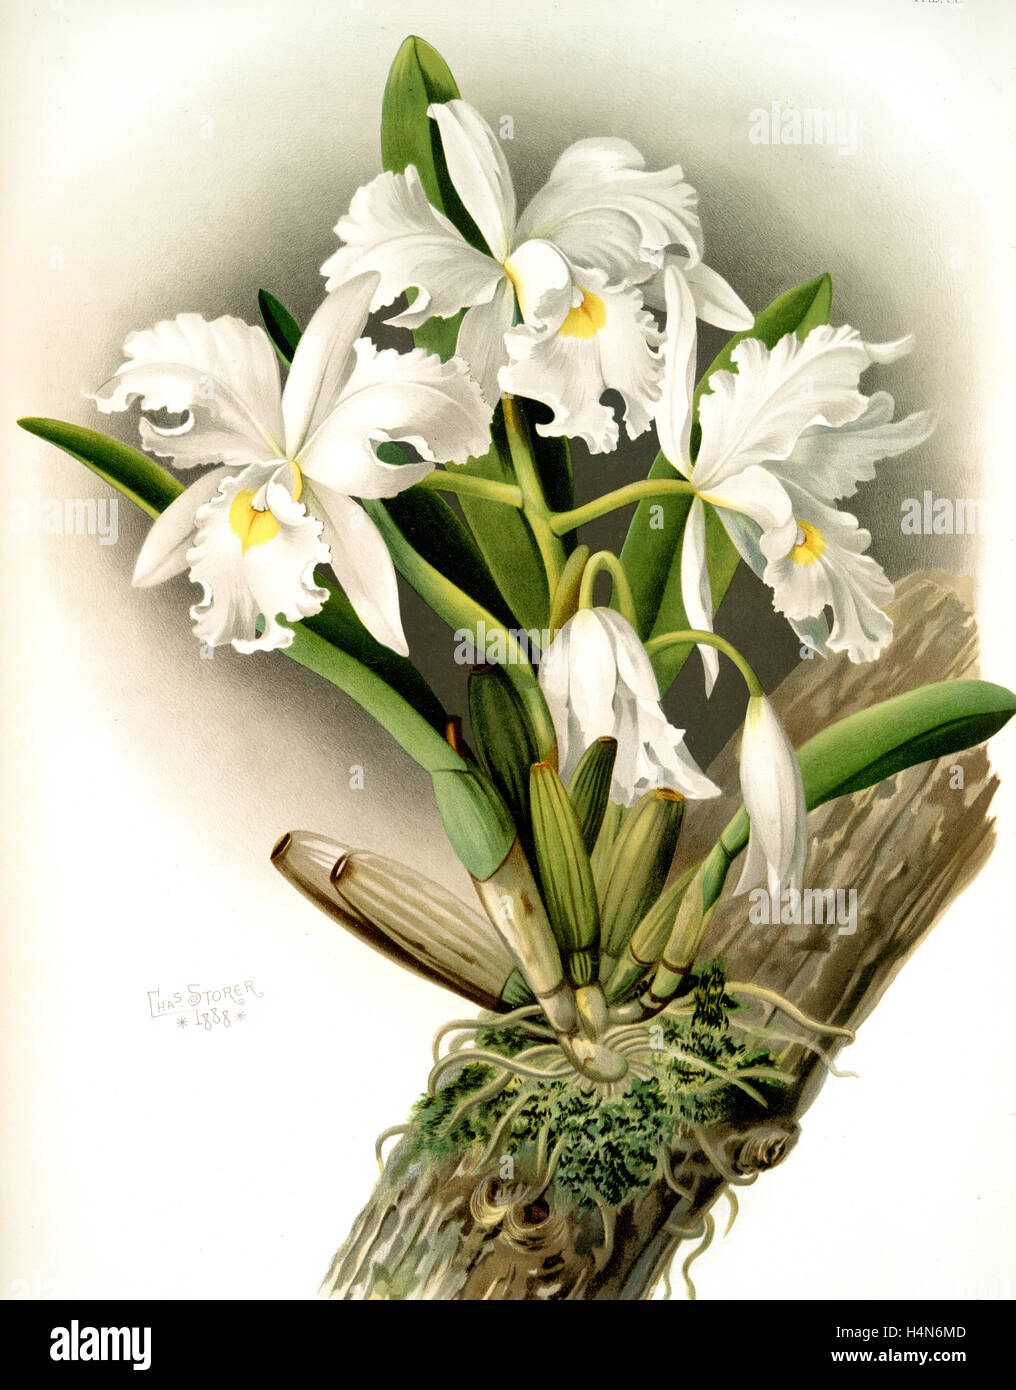 Cattleya rochellensis, Sander, F. (Frederick), 1847-1920, Author, Storer, Charles, Artist, Leutzsch, Gustav, Lithographer Stock Photo